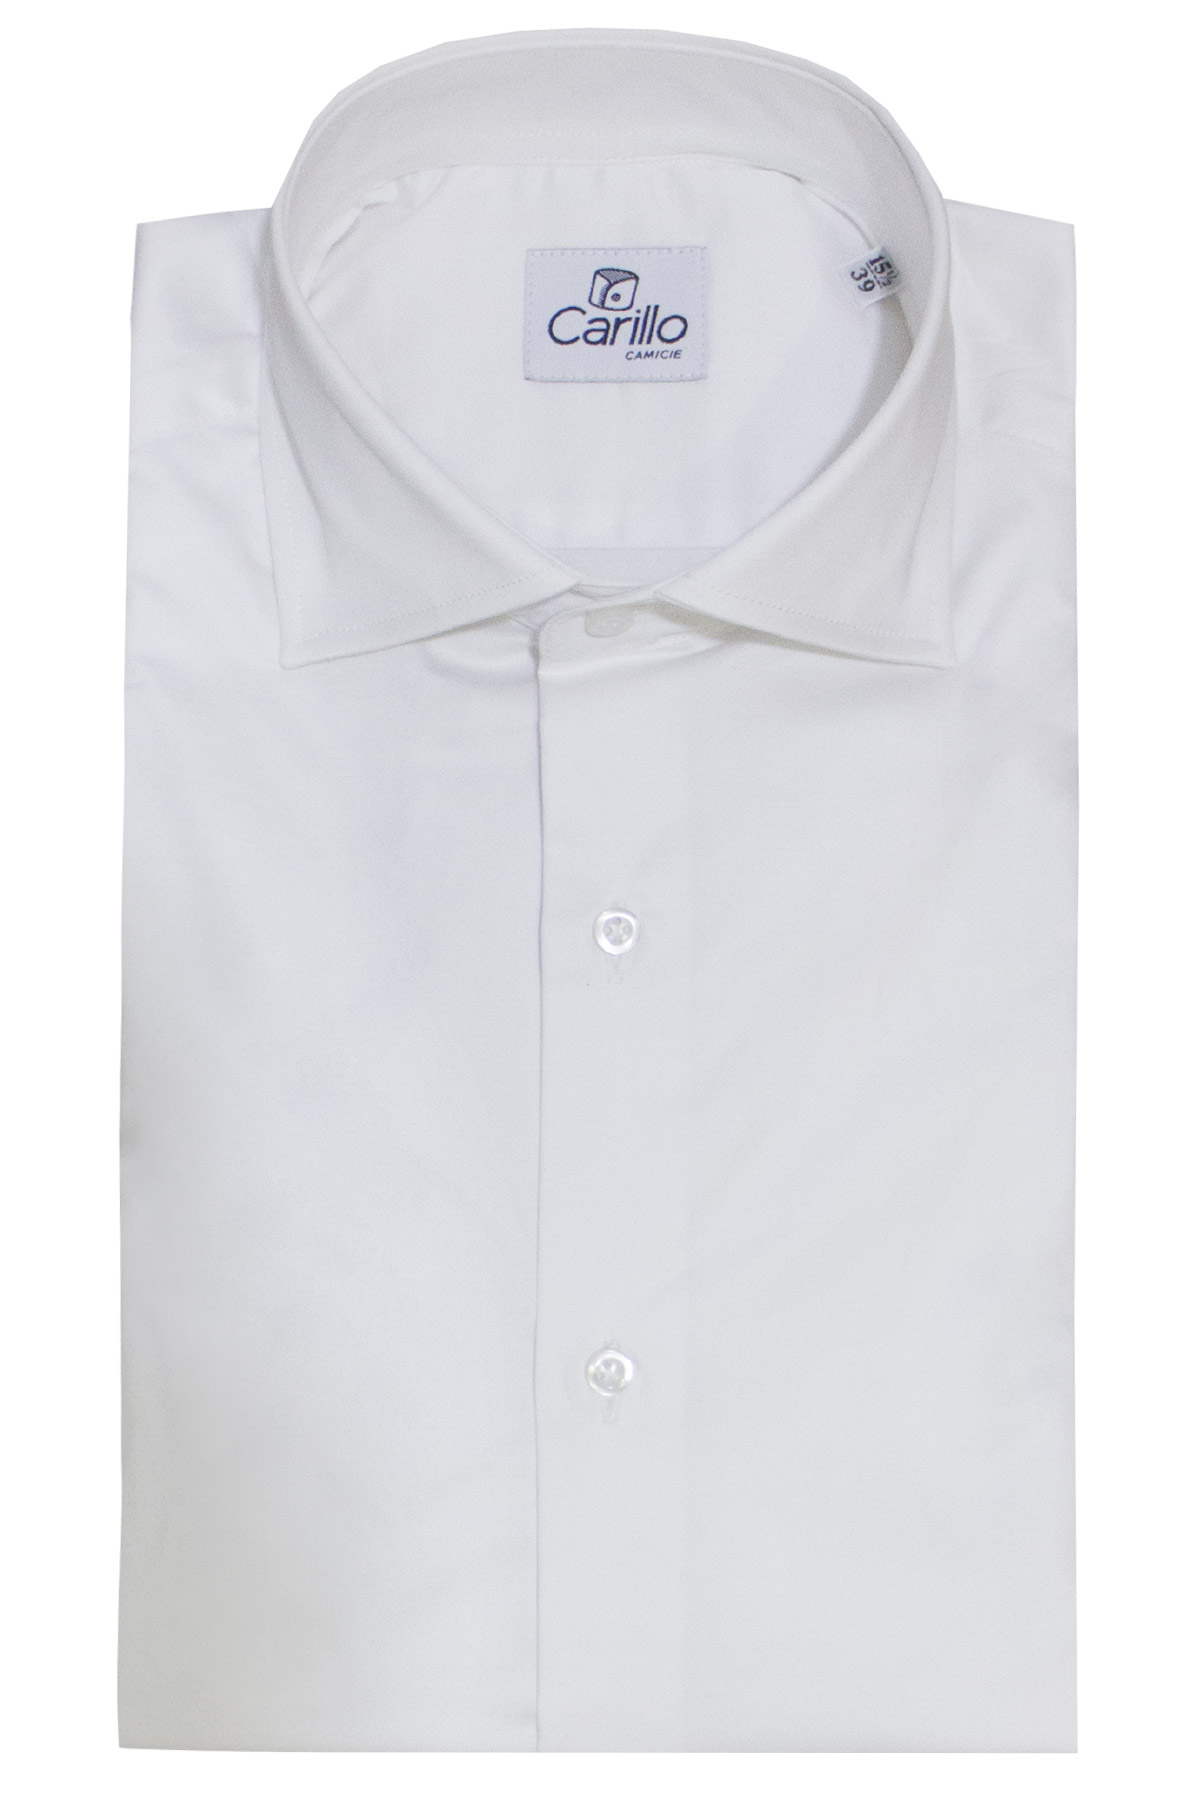 sconto 66% MODA UOMO Camicie & T-shirt Custom fit Richards Camicia Bianco/Blu 40 